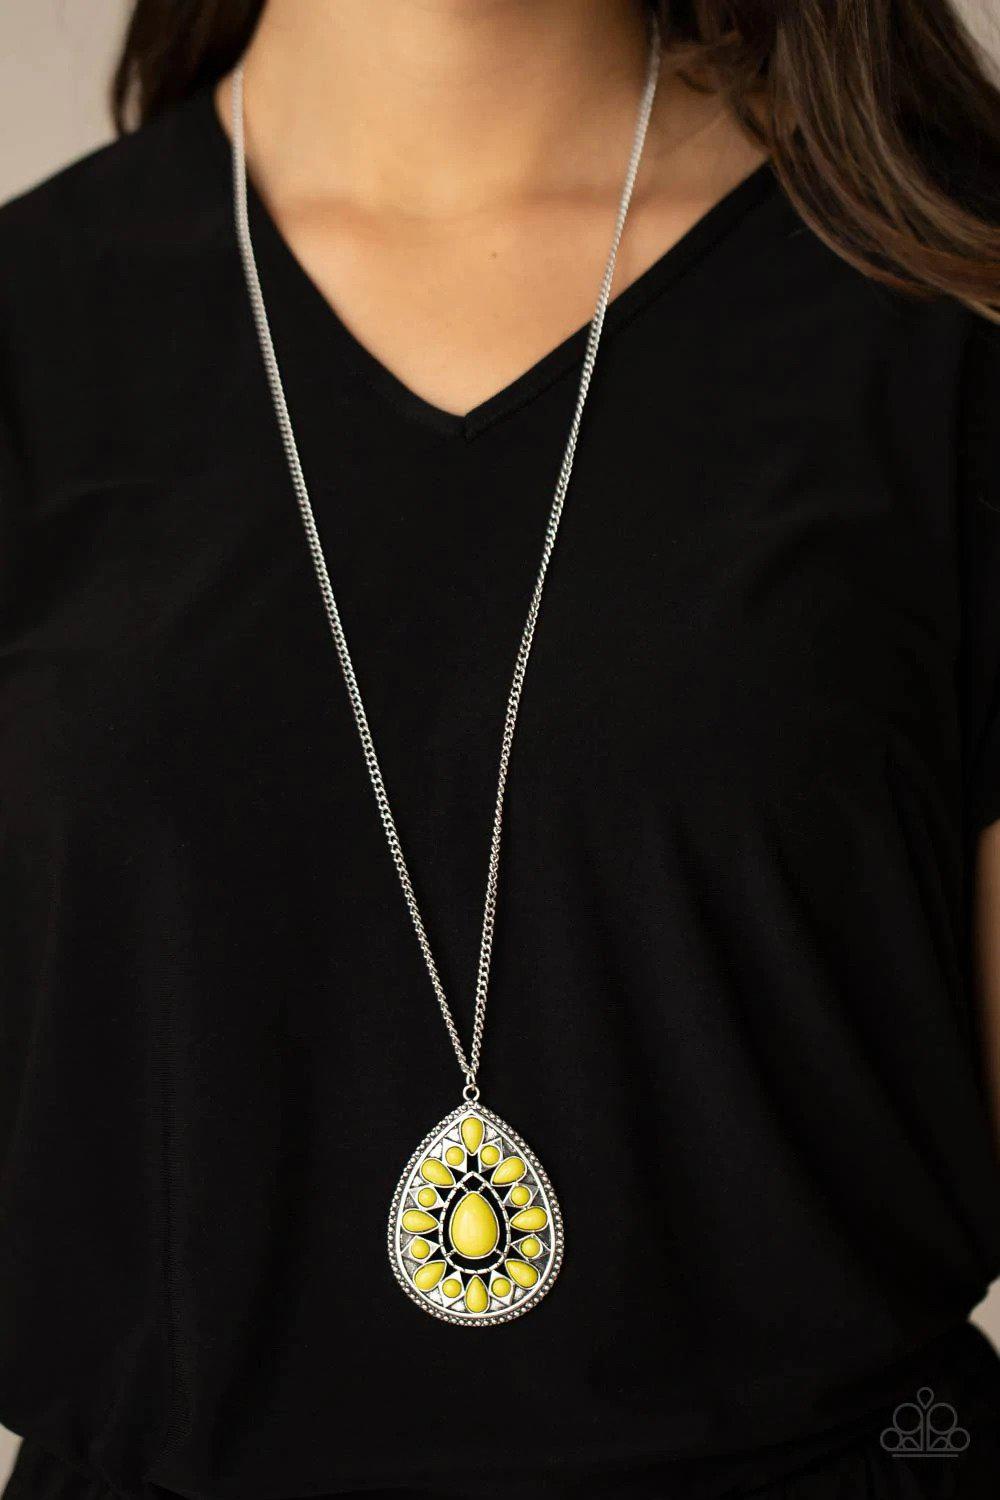 Retro Prairies Yellow Necklace - Paparazzi Accessories- lightbox - CarasShop.com - $5 Jewelry by Cara Jewels